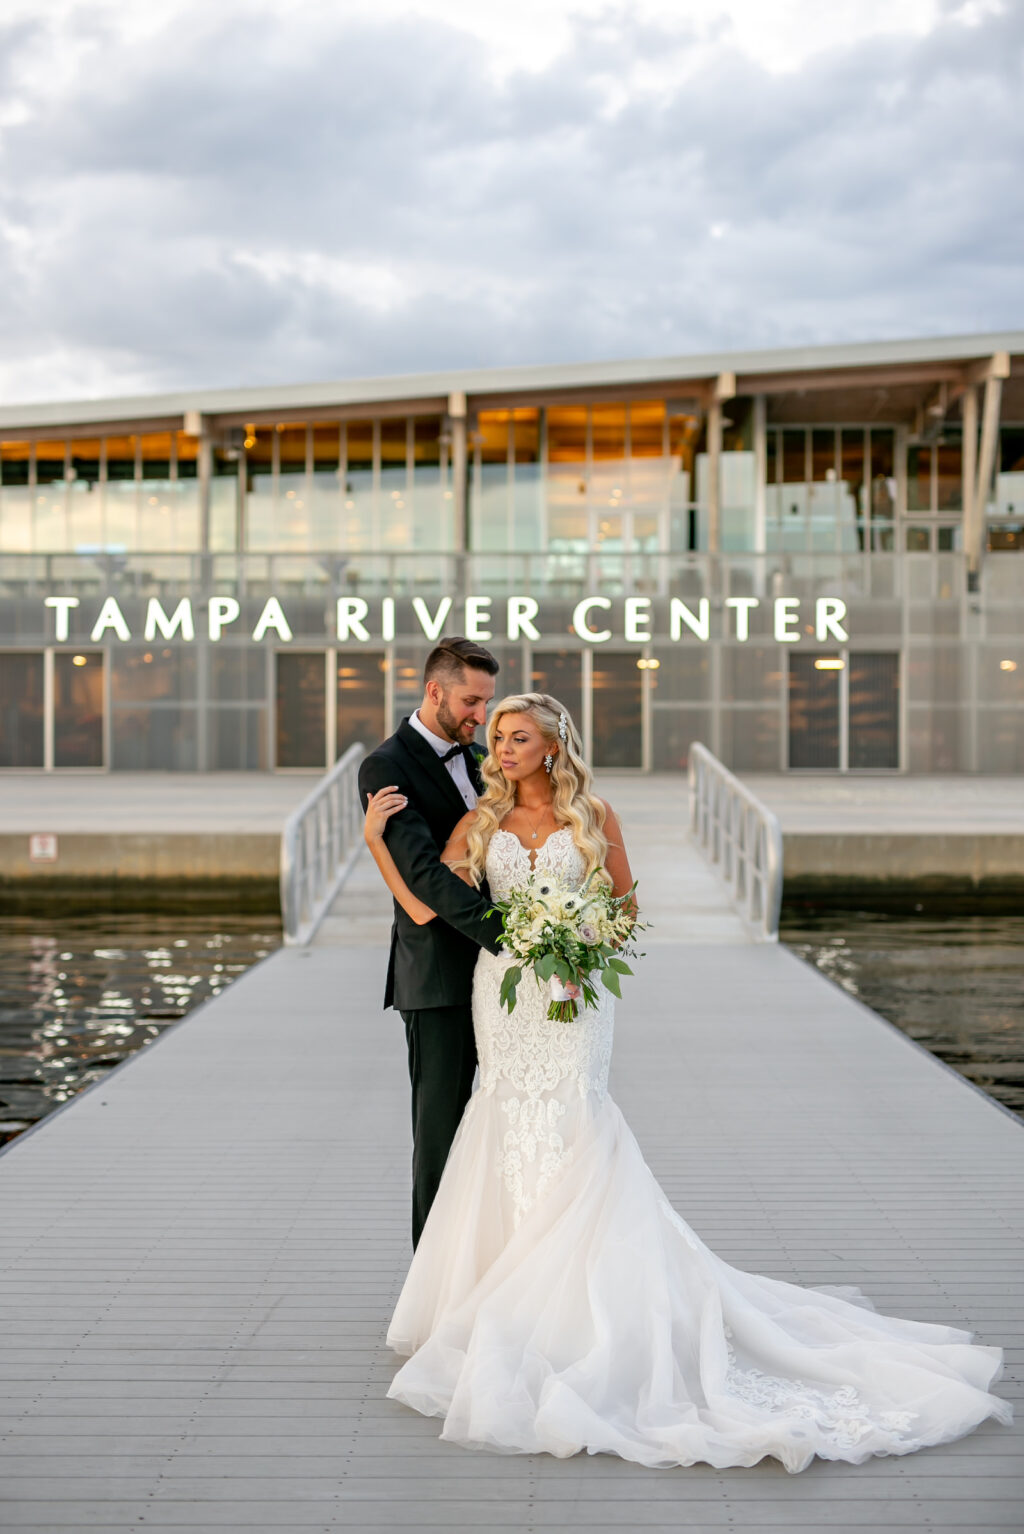 Florida Modern Elegant Bride and Groom on Dock | Wedding Venue Tampa River Center | Wedding Hair and Makeup Femme Akoi Beauty Studio